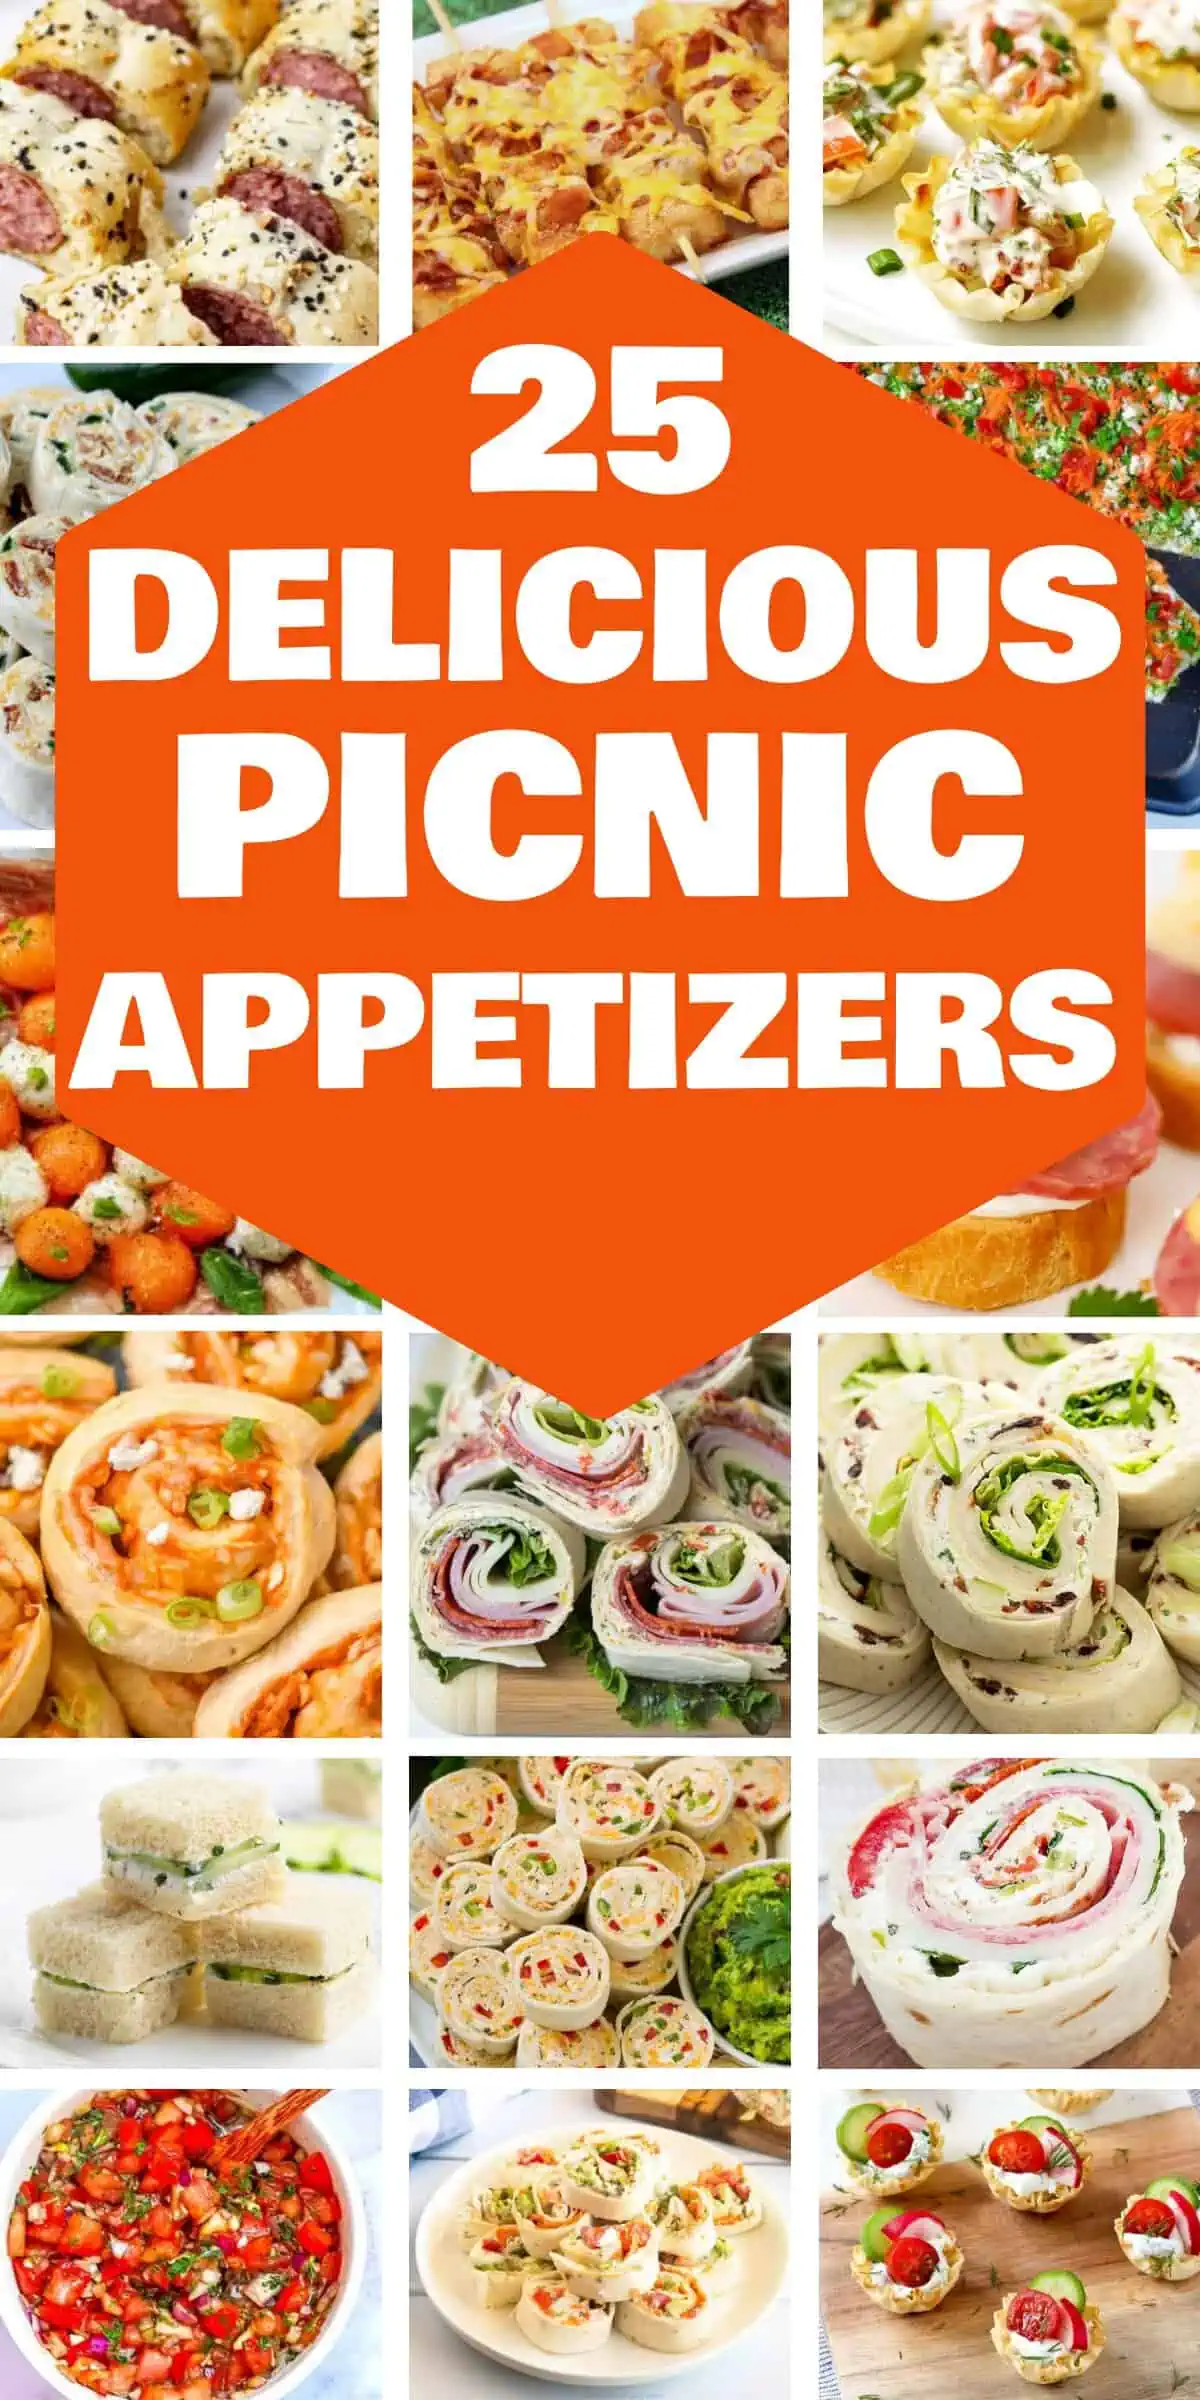 25 Delicious Picnic Appetizers